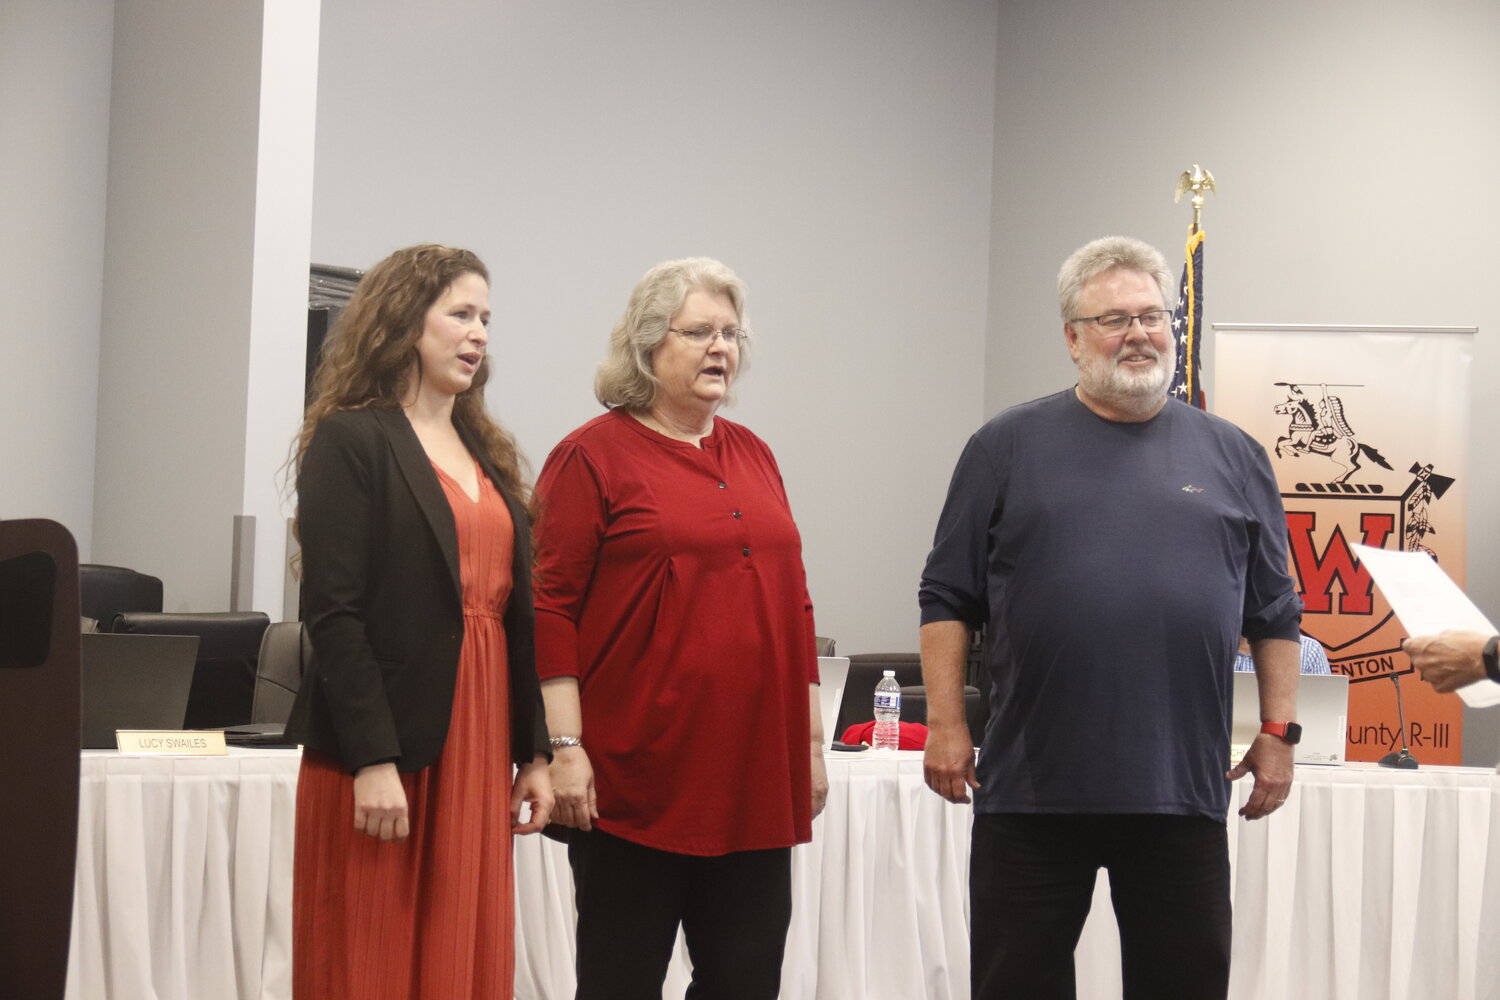 Oath of Office: Carolyn Spraggs (left), Franci Schwartz and Rich Barton (right) take the oath of office at the Warren County R-III school board reorganizational meeting last week.